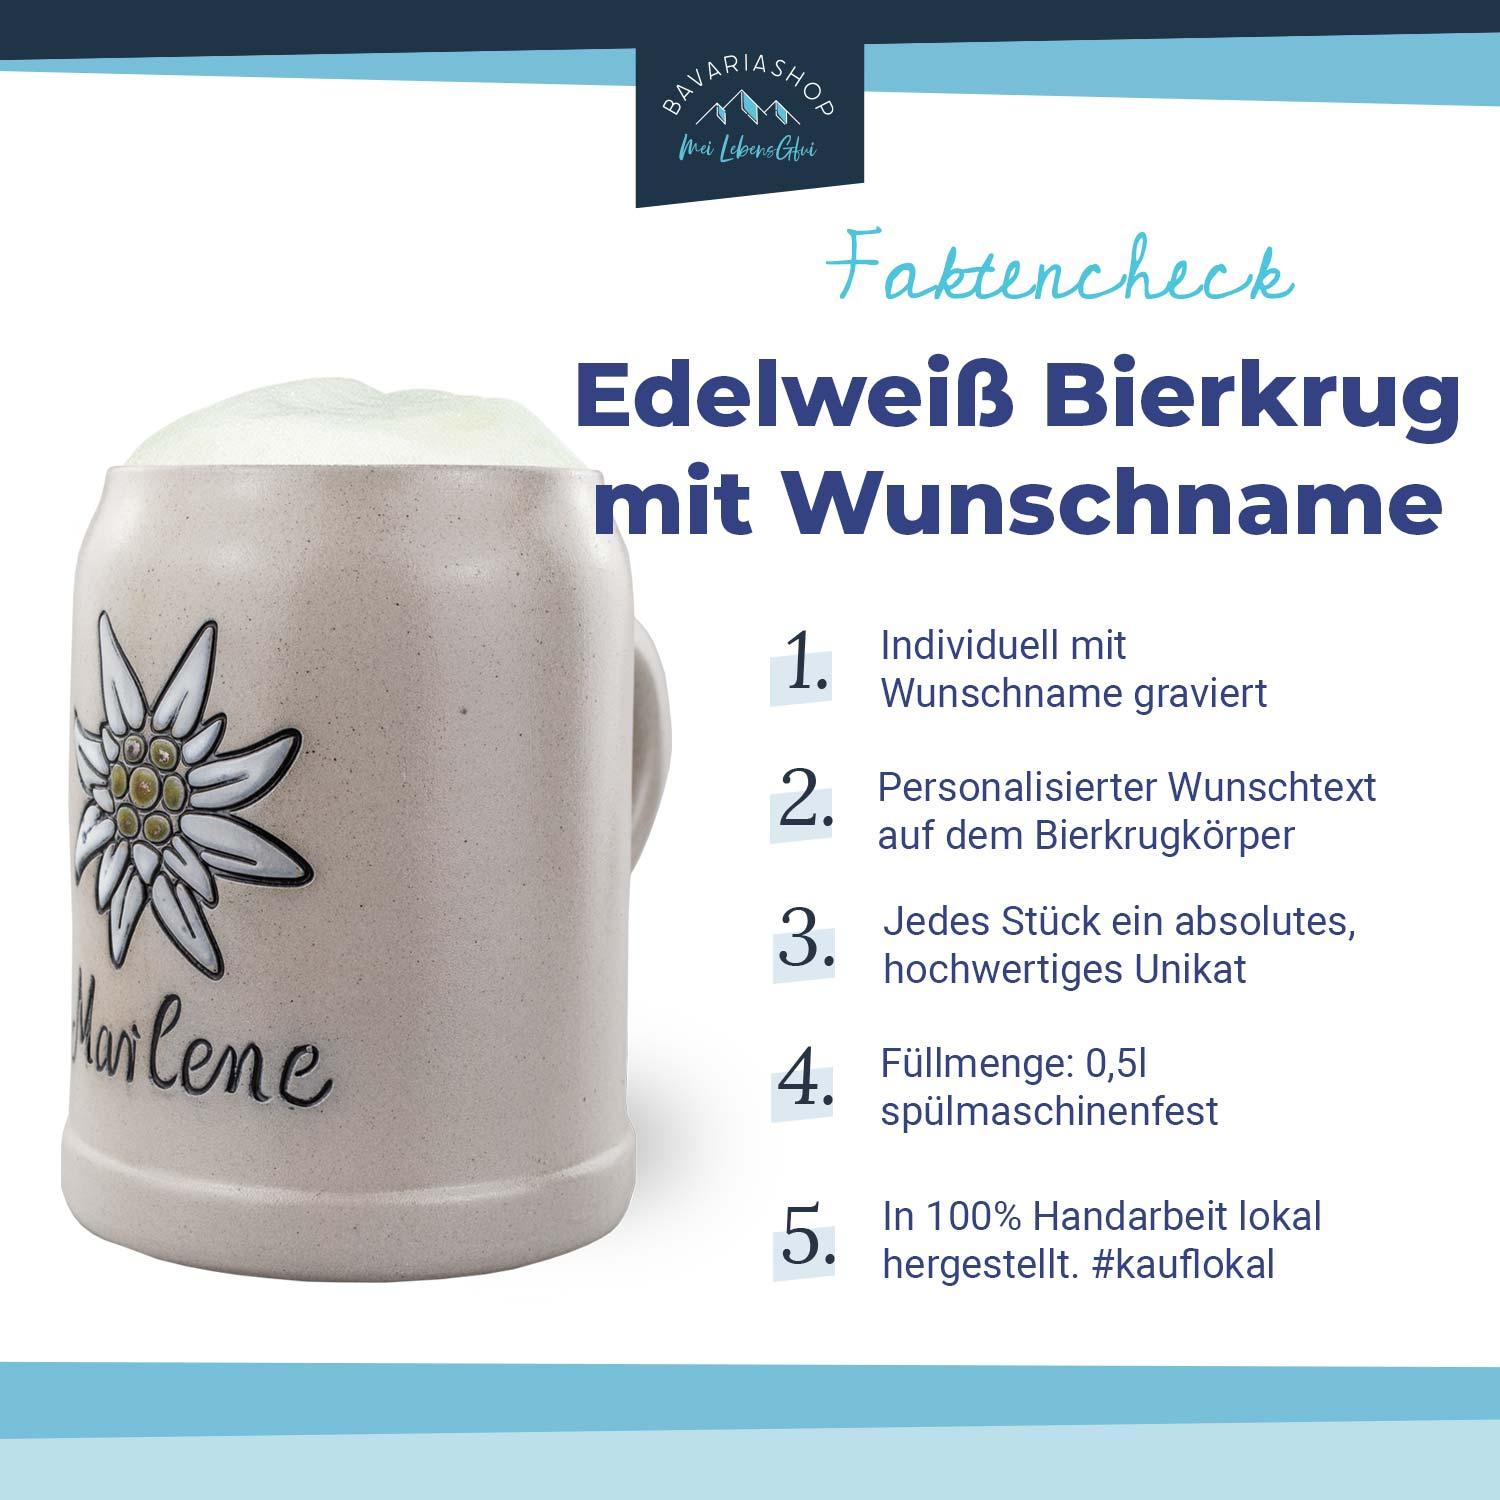 PREMIUM Bierkrug "Edelweiß" - bavariashop - mei LebensGfui